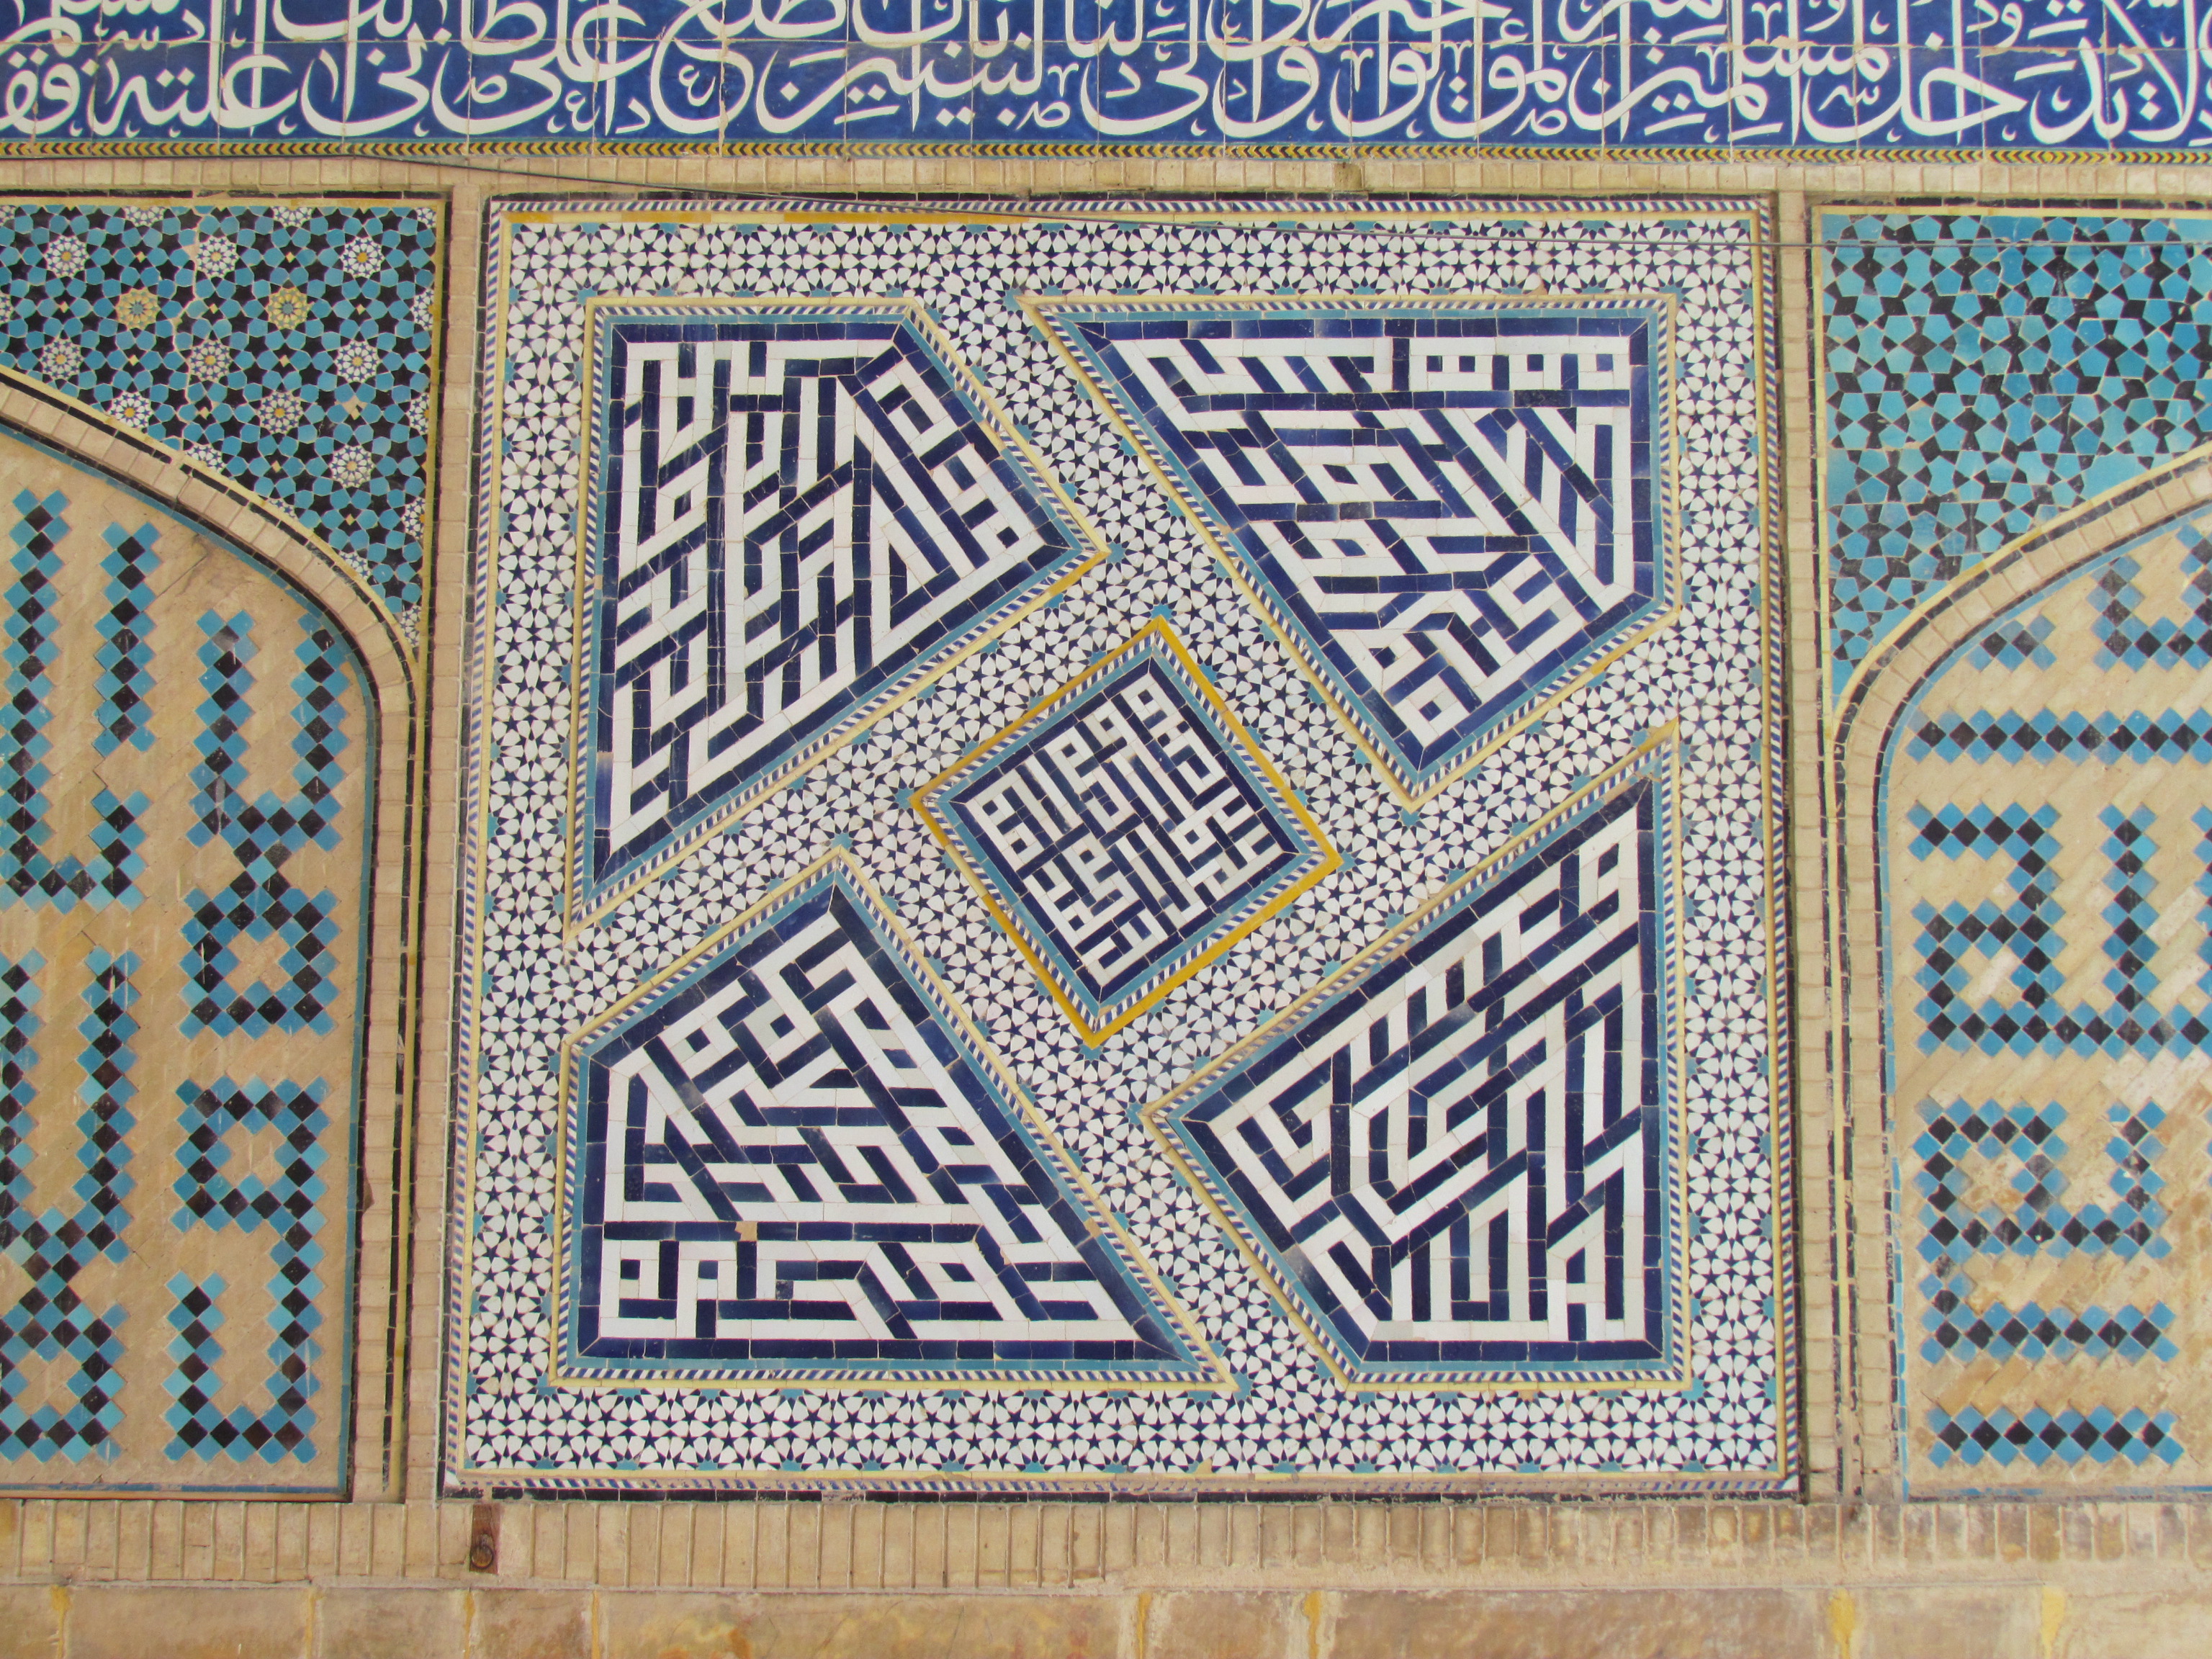 General 3072x2304 Iran history pattern Islamic architecture